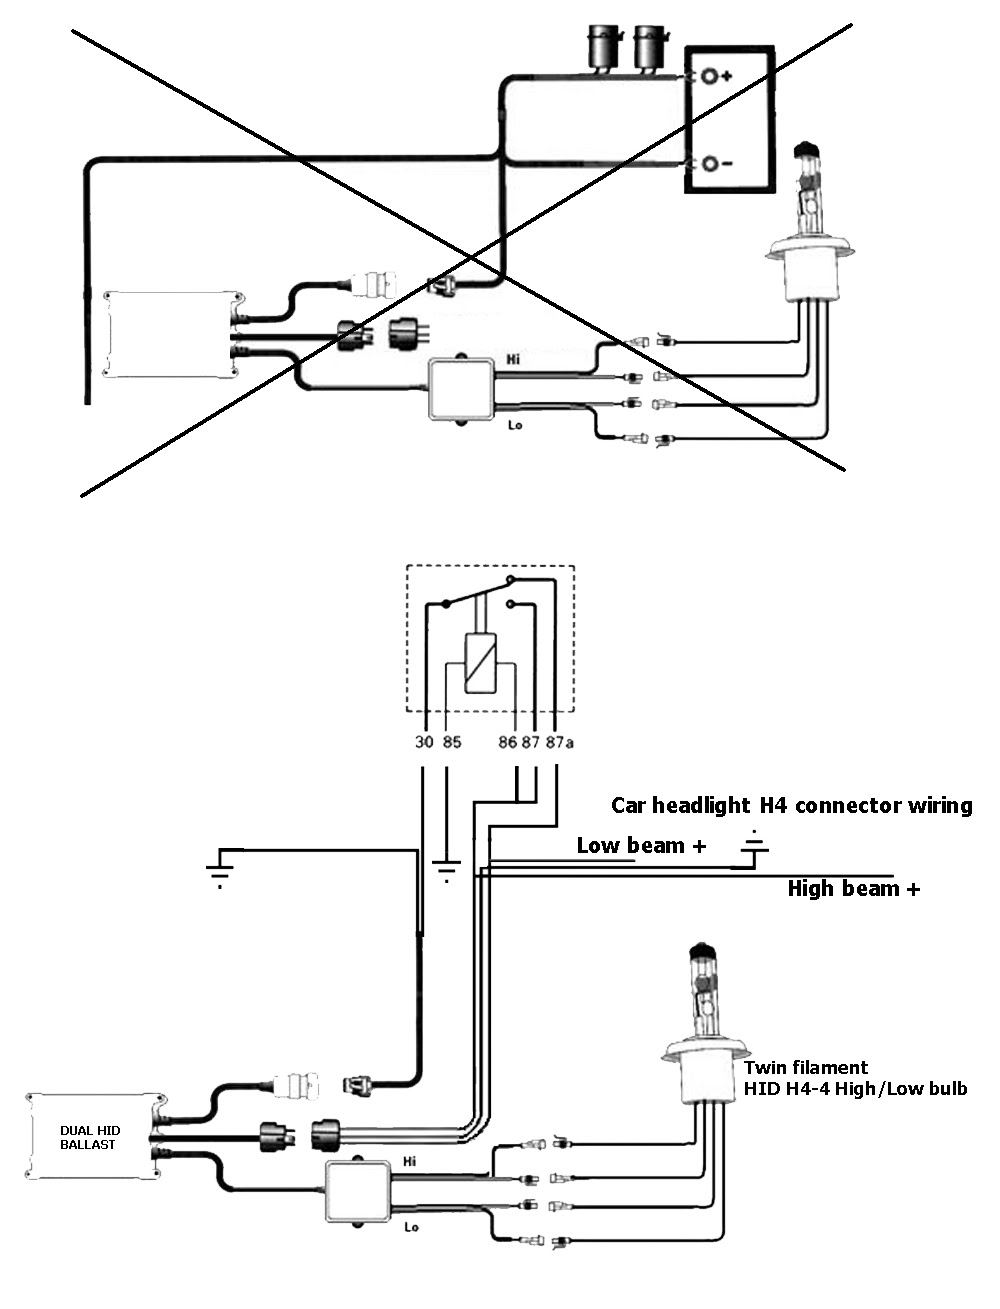 Wiring Diagram For A Bench Grinder - Complete Wiring Schemas